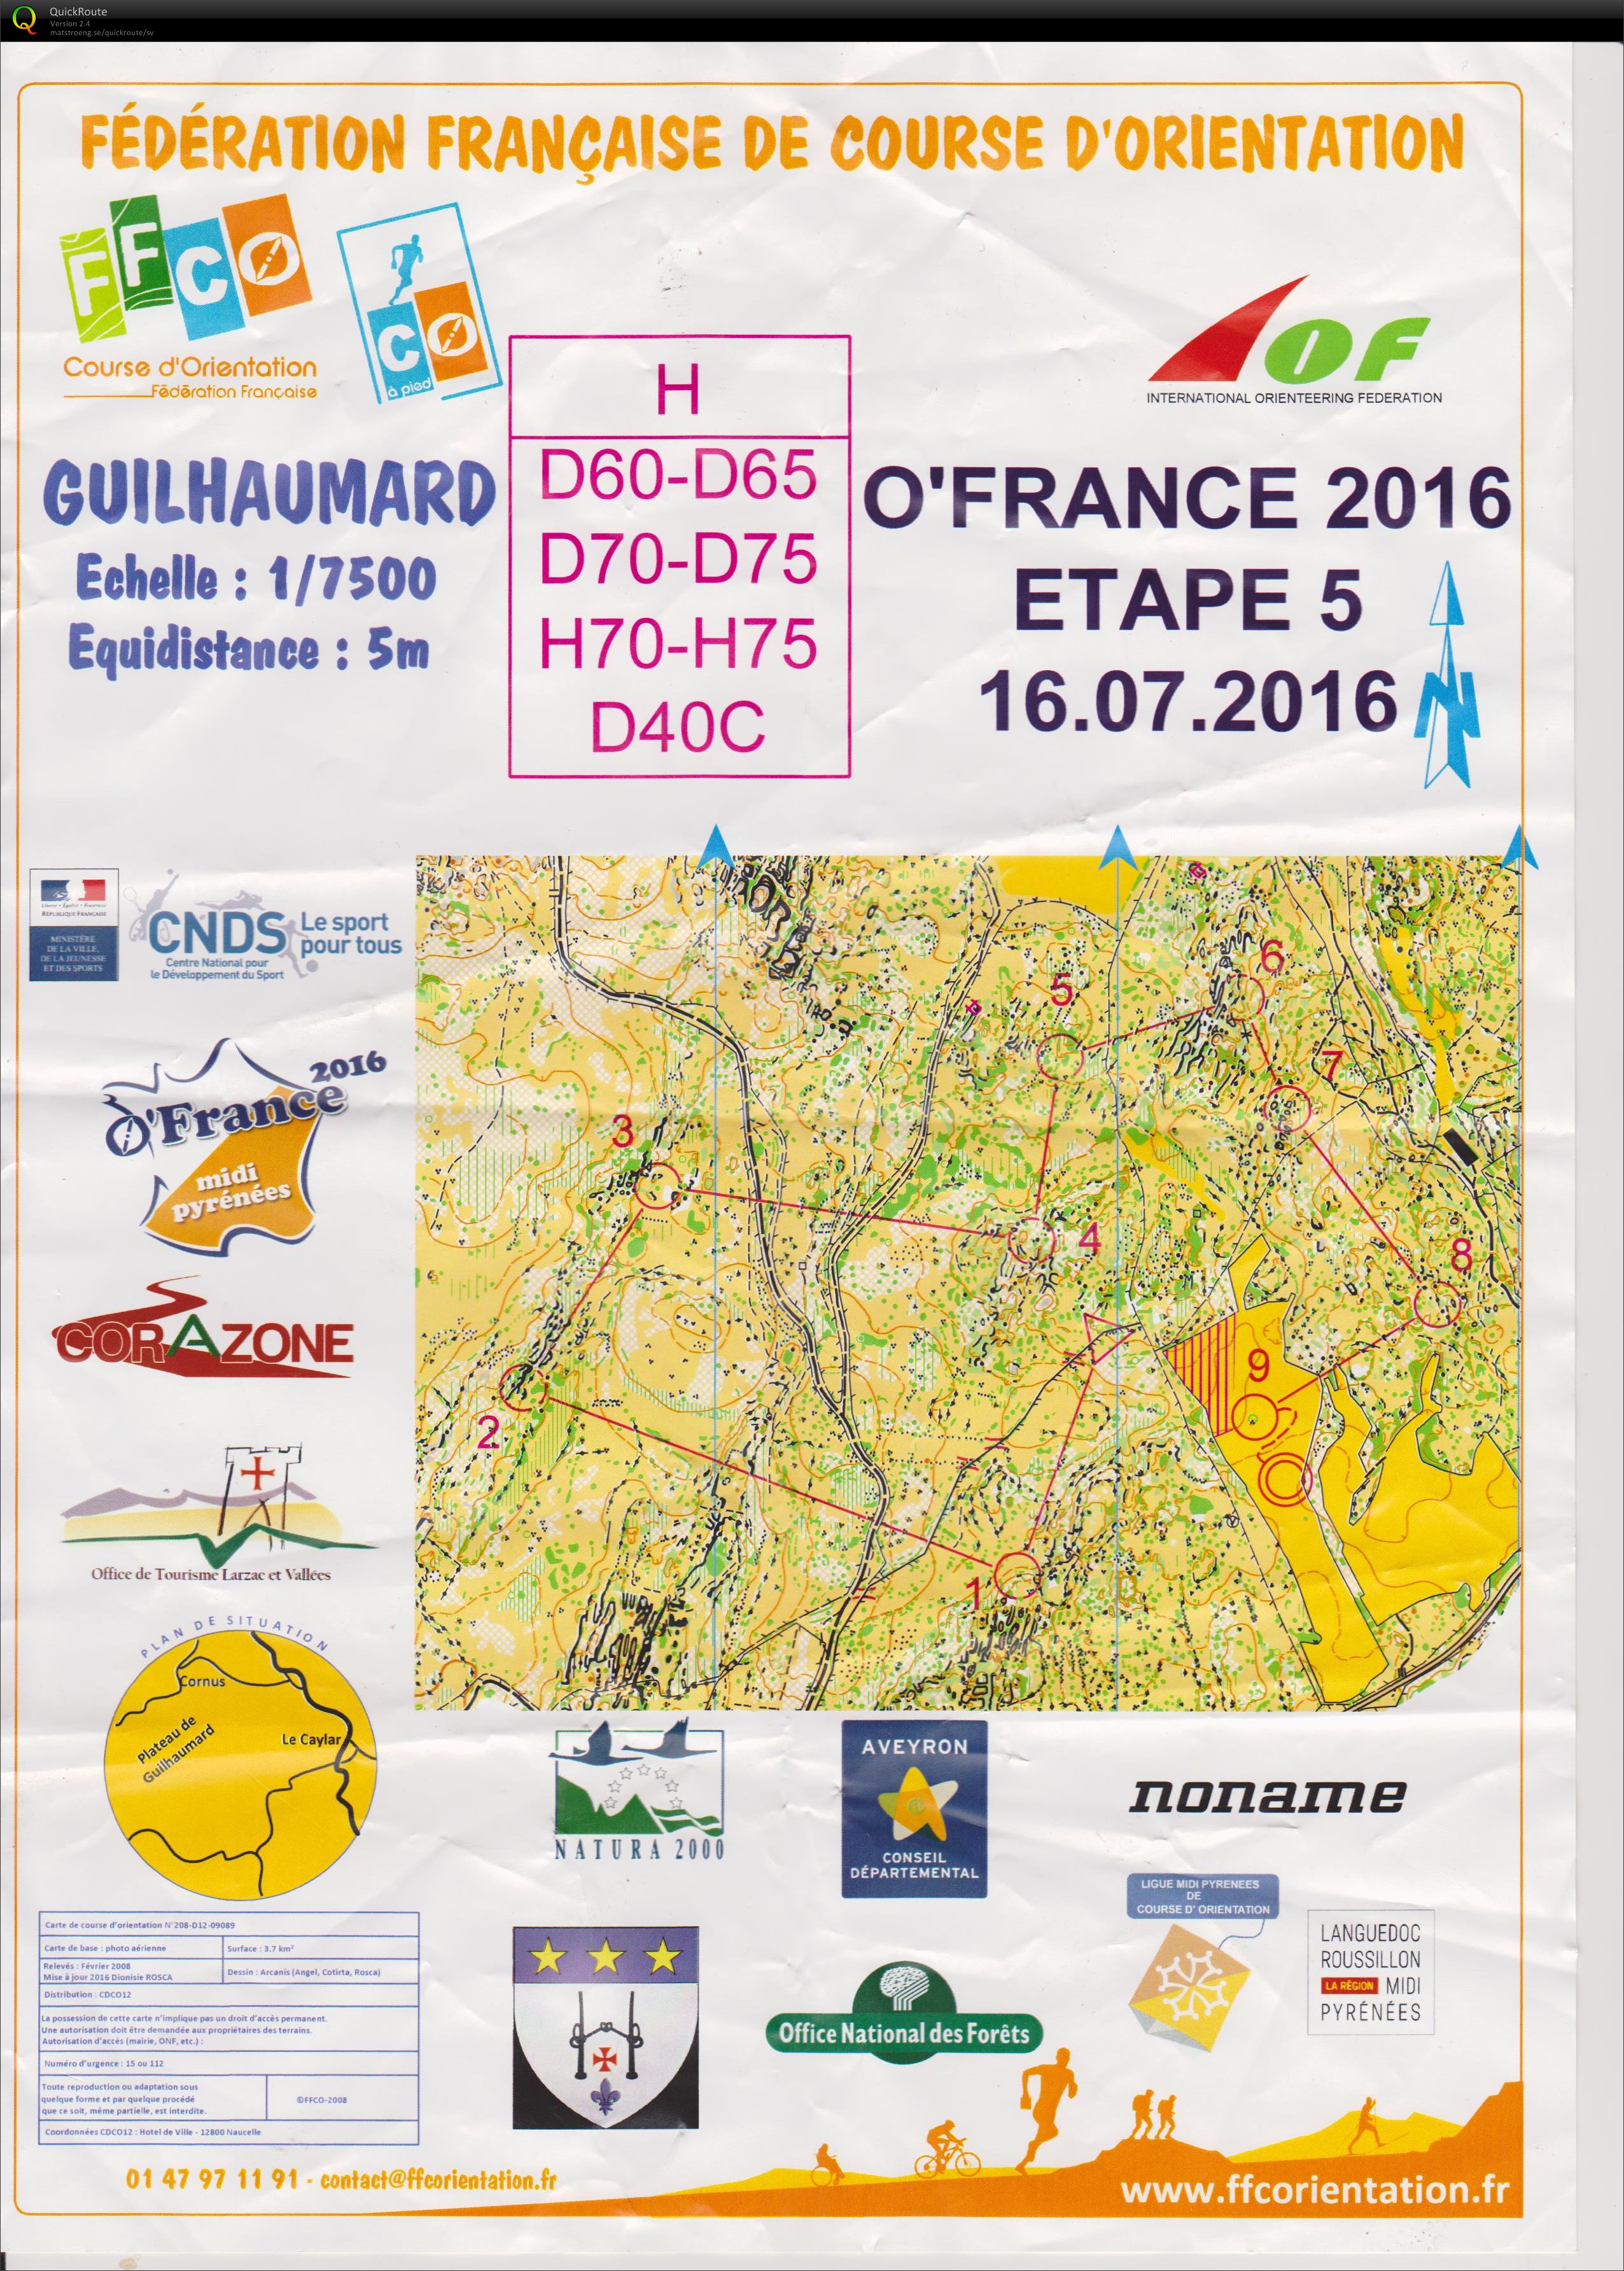 O'France 2016 Etp 5  (16/07/2016)